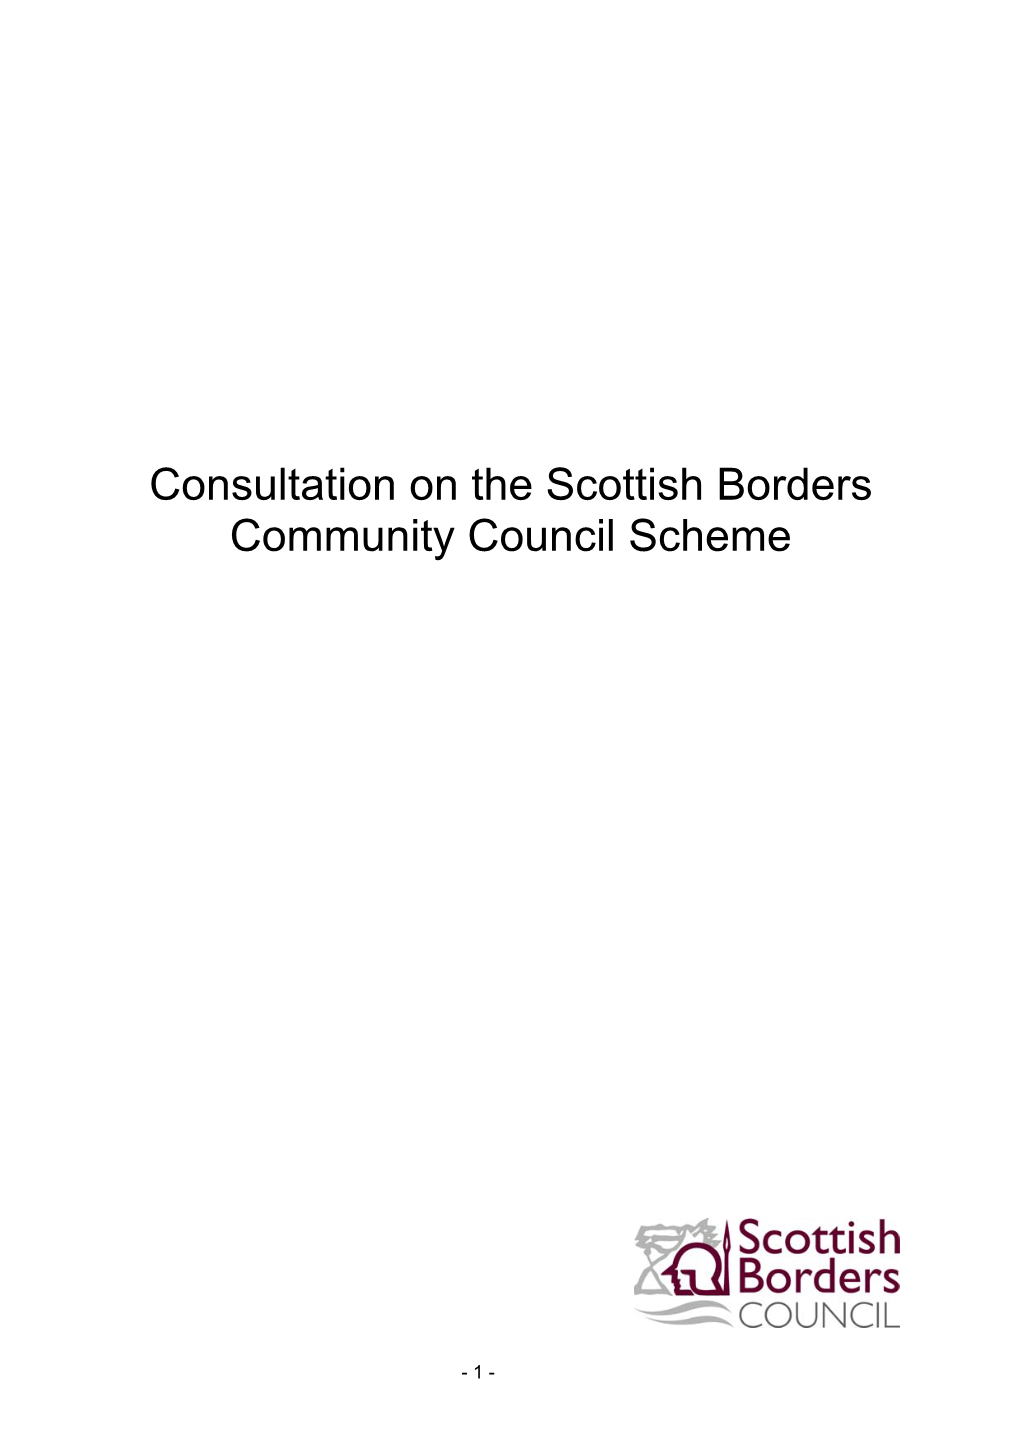 Consultation on the Scottish Borders Community Council Scheme